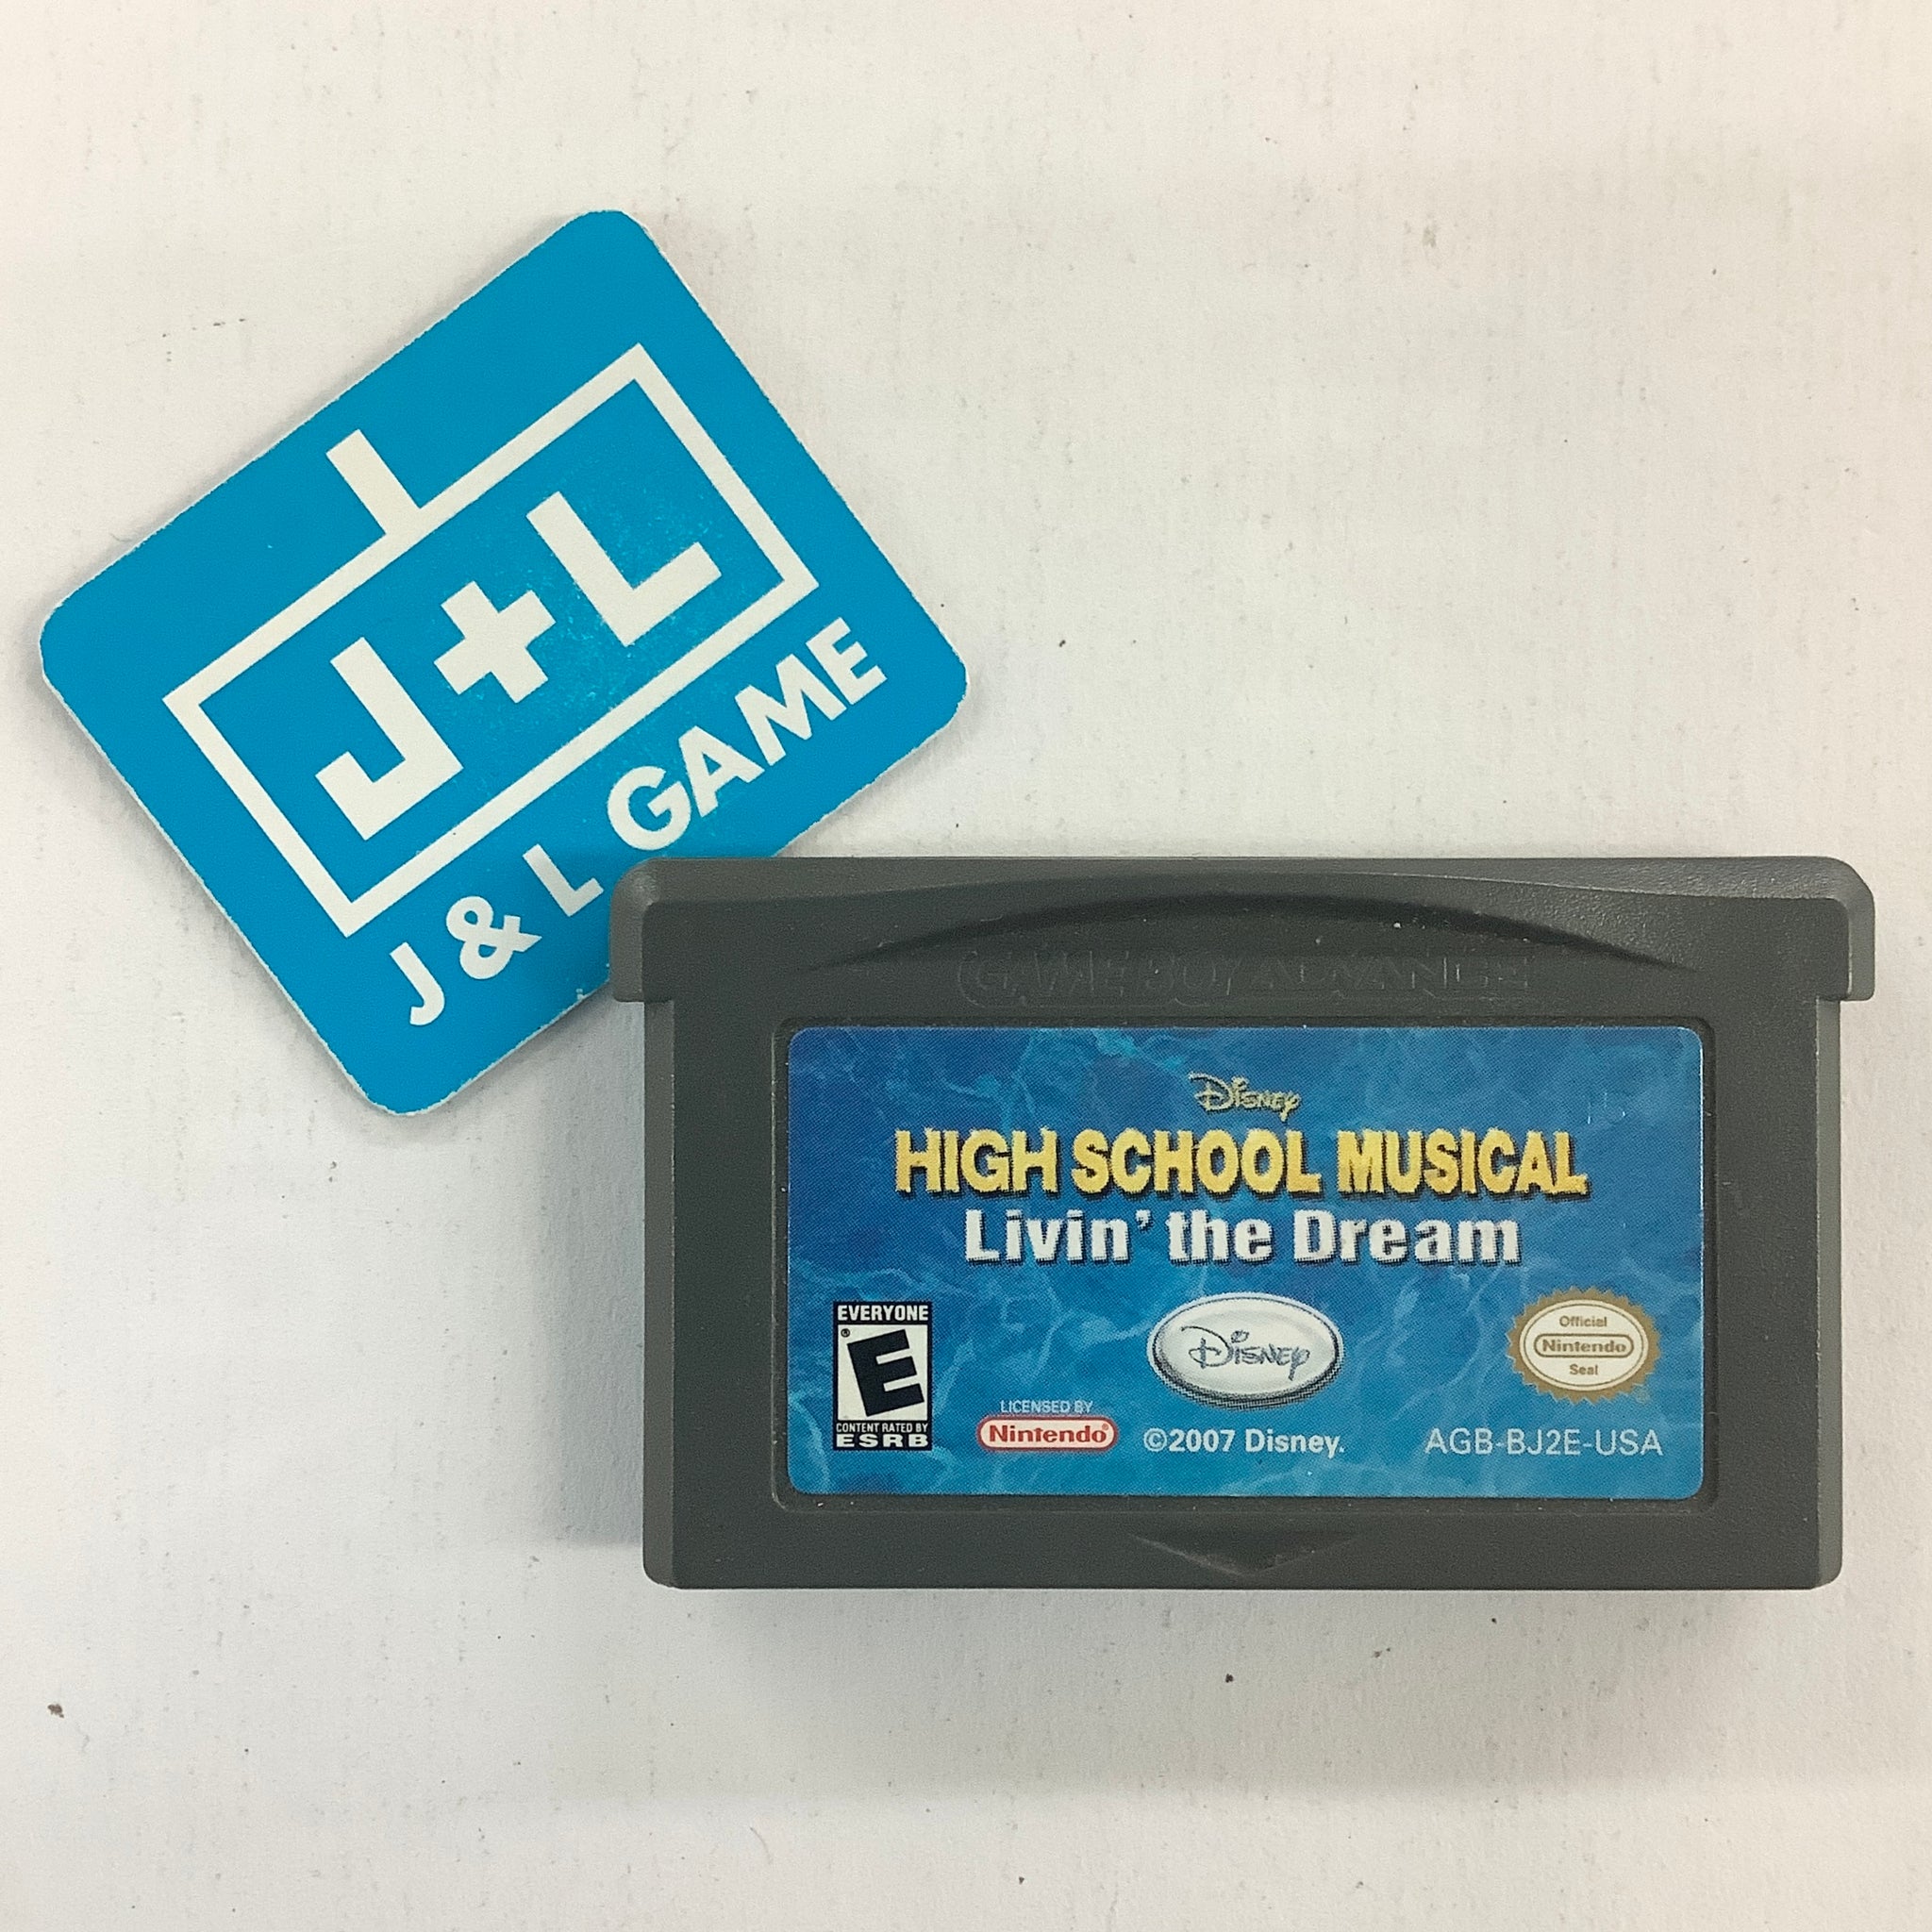 Disney High School Musical: Livin' the Dream - (GBA) Game Boy Advance [Pre-Owned] Video Games Disney Interactive Studios   